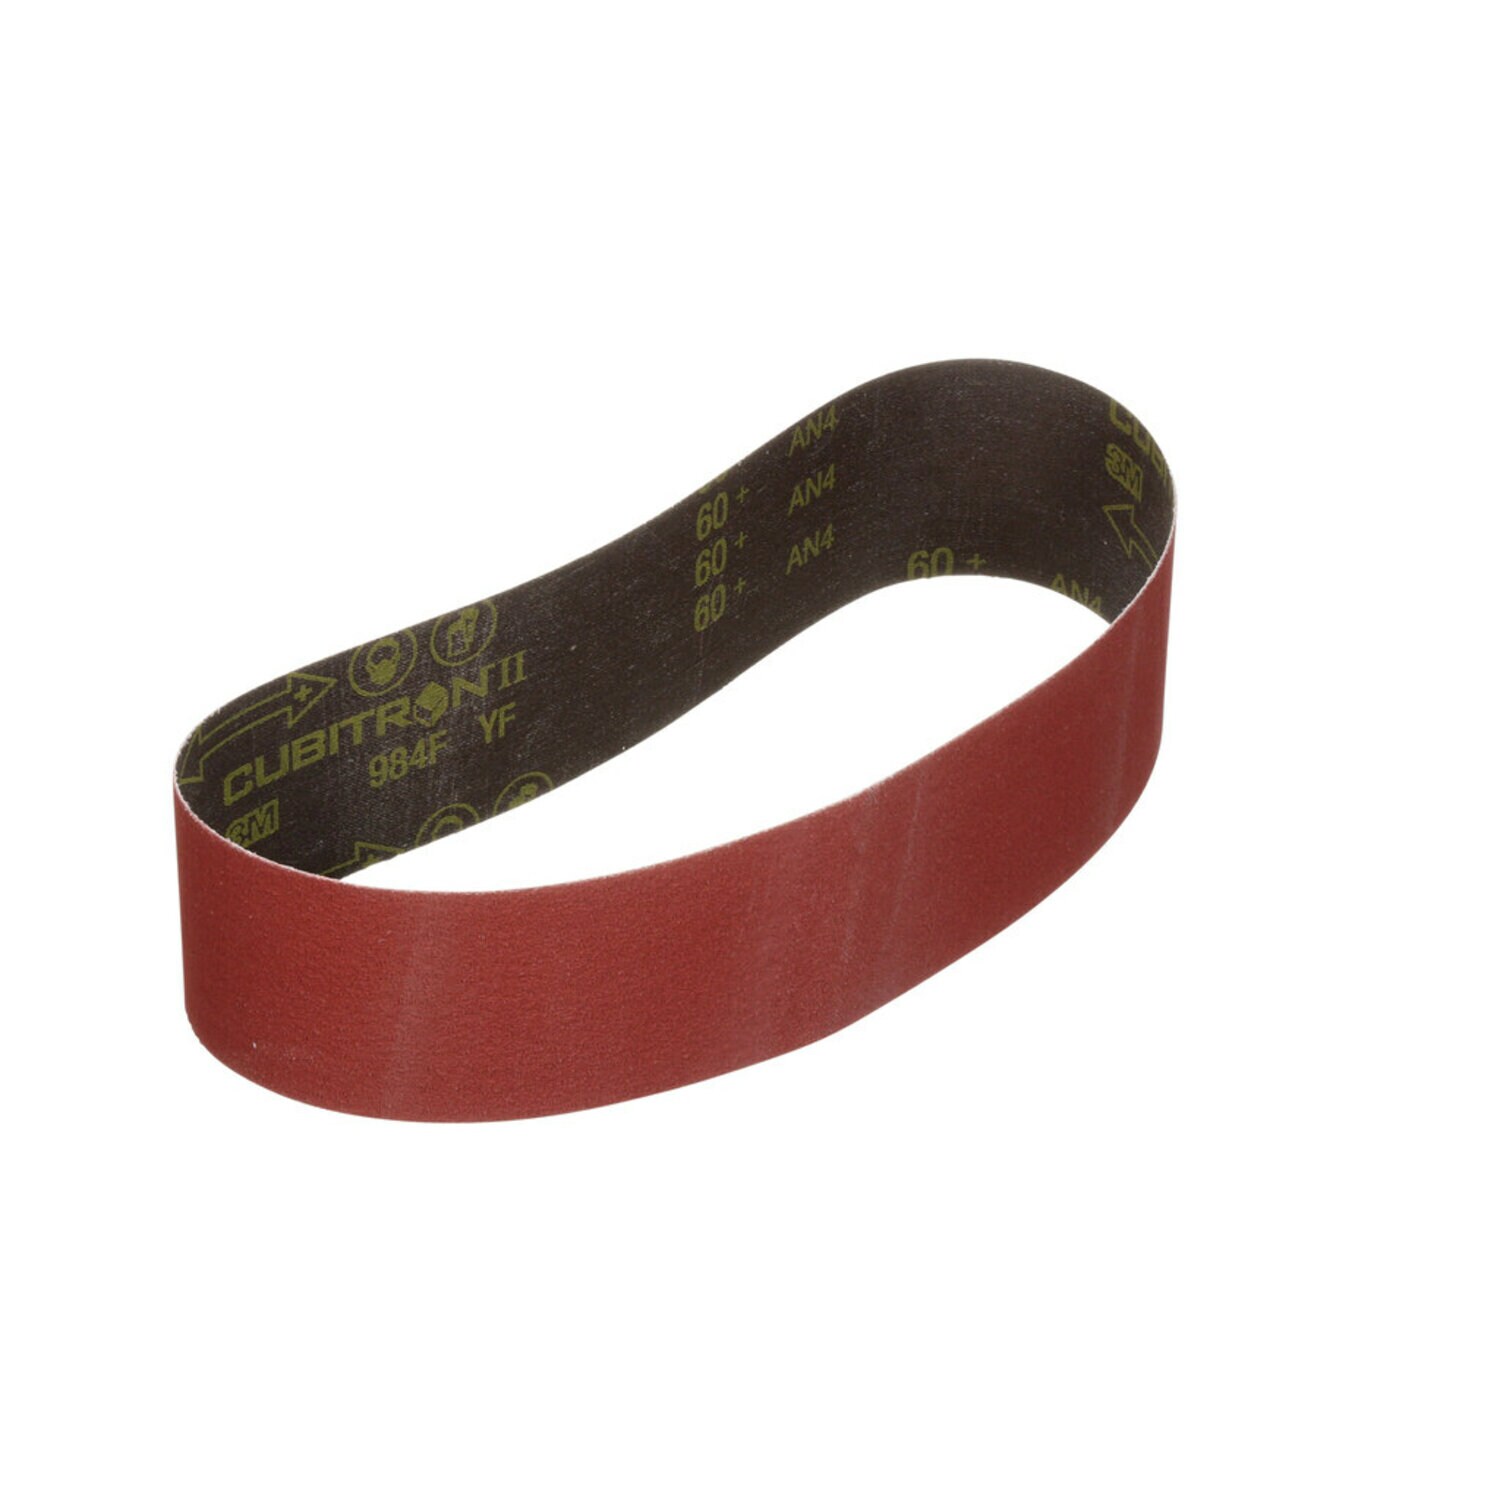 7010513633 - 3M Cubitron II Cloth Belt 984F, 36+ YF-weight, 1/4 in x 24 in,
Fabri-lok, Single-flex